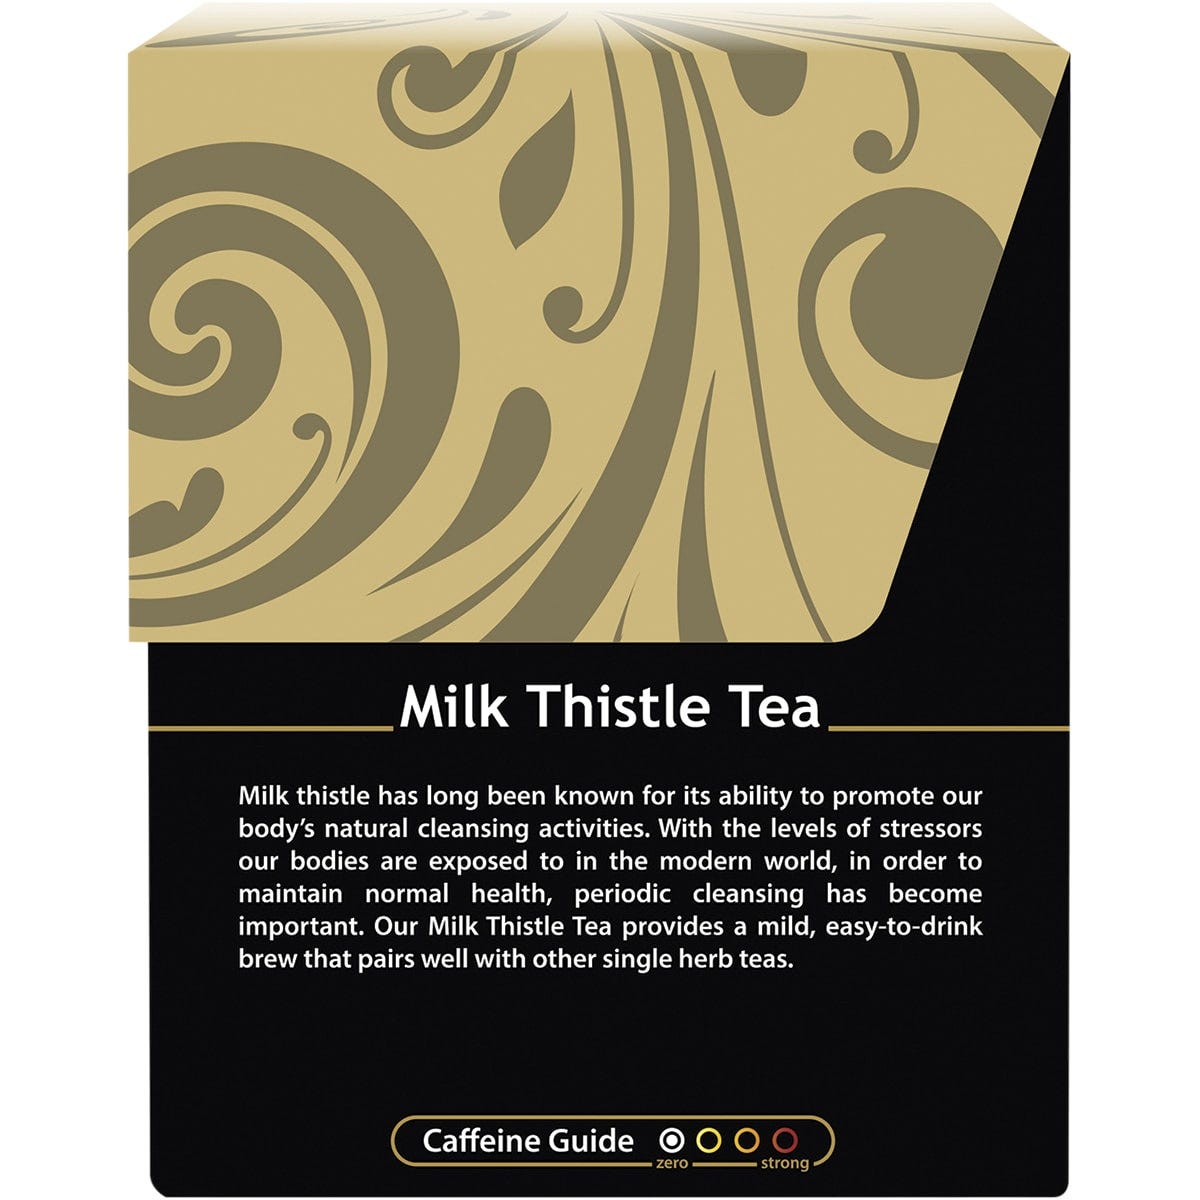 Buddha Teas Organic Herbal Tea Bags Milk Thistle Tea